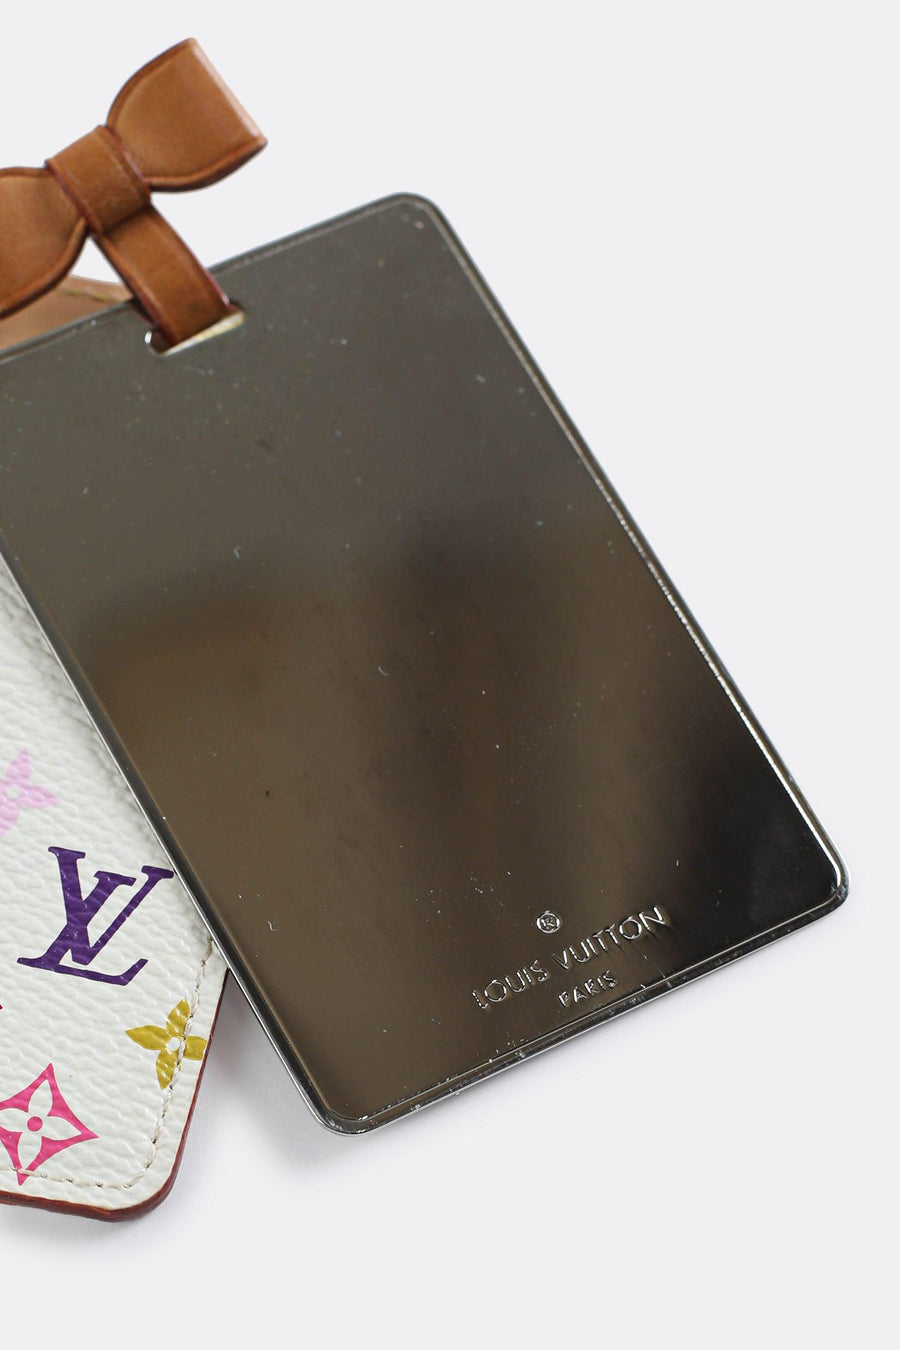 Louis Vuitton White Monogram Multicolor Card Holder or Mirror Case